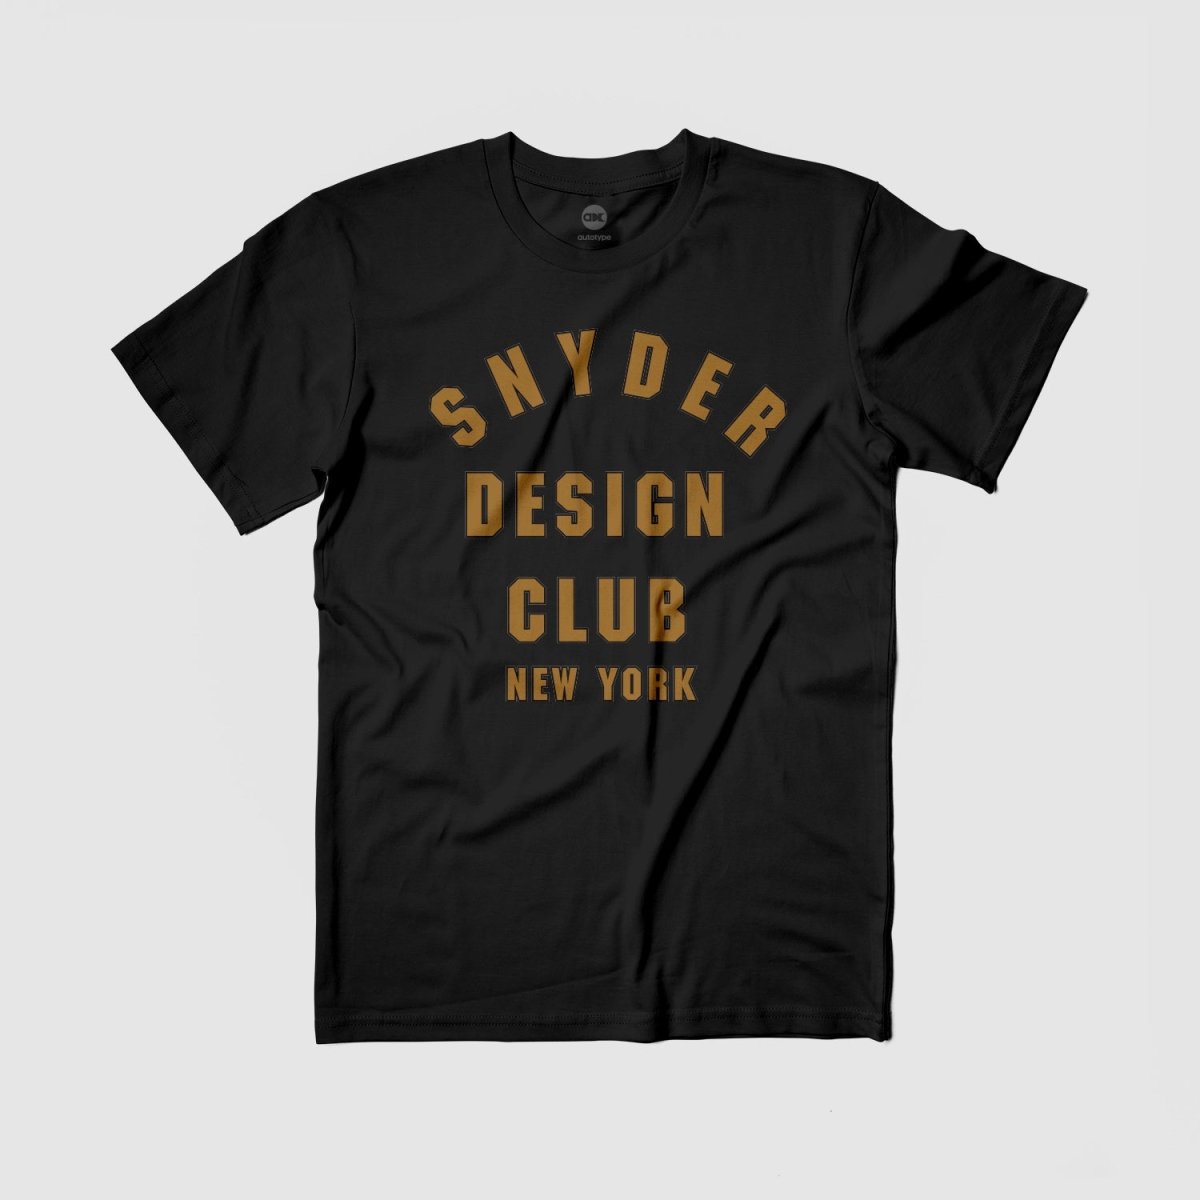 Snyder Design Club Tee